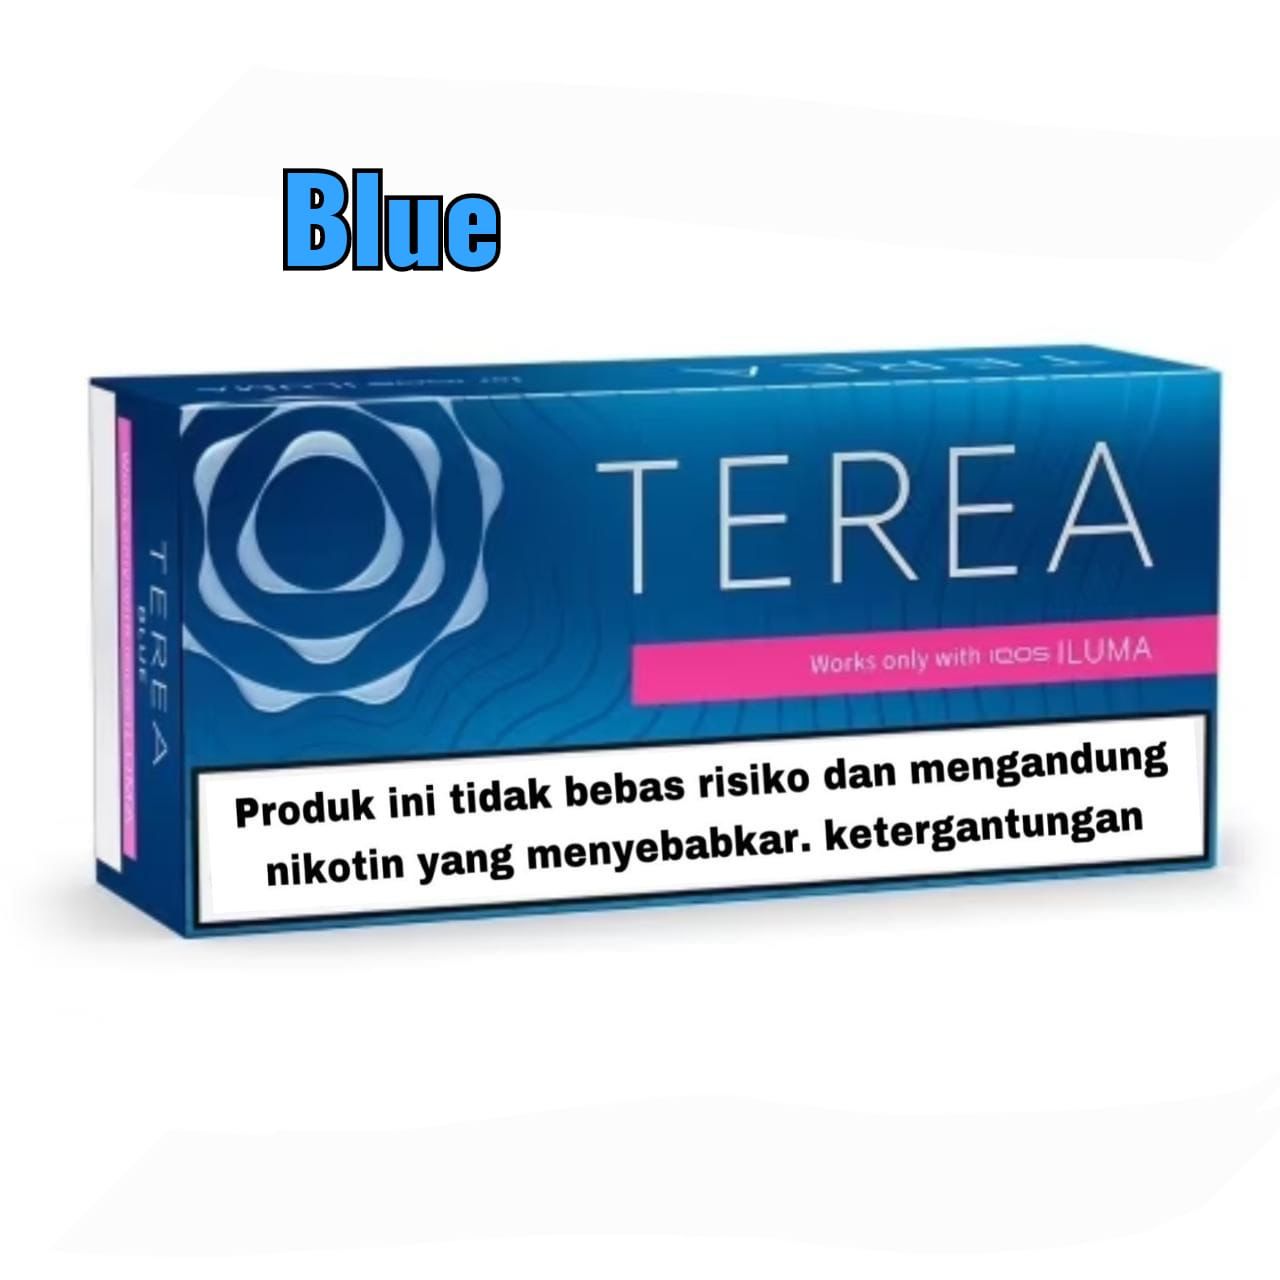 New IQOS Terea Indonesian (Terea Blue) Best Price in UAE